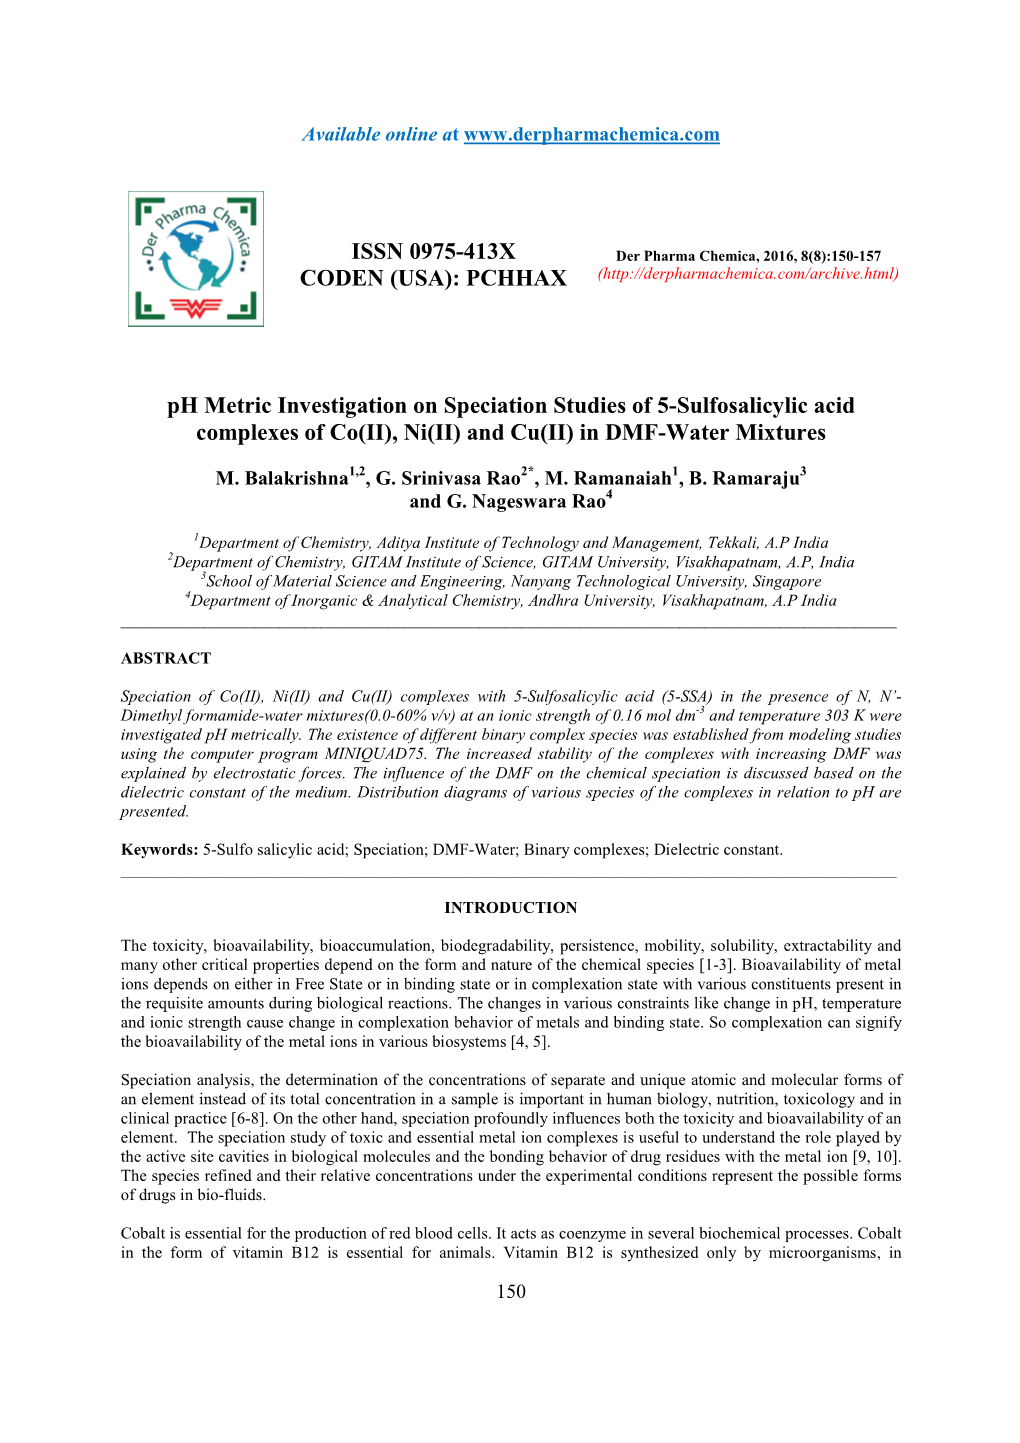 Ph Metric Investigation on Speciation Studies of 5-Sulfosalicylic Acid Complexes of Co(II), Ni(II) and Cu(II) in DMF-Water Mixtures